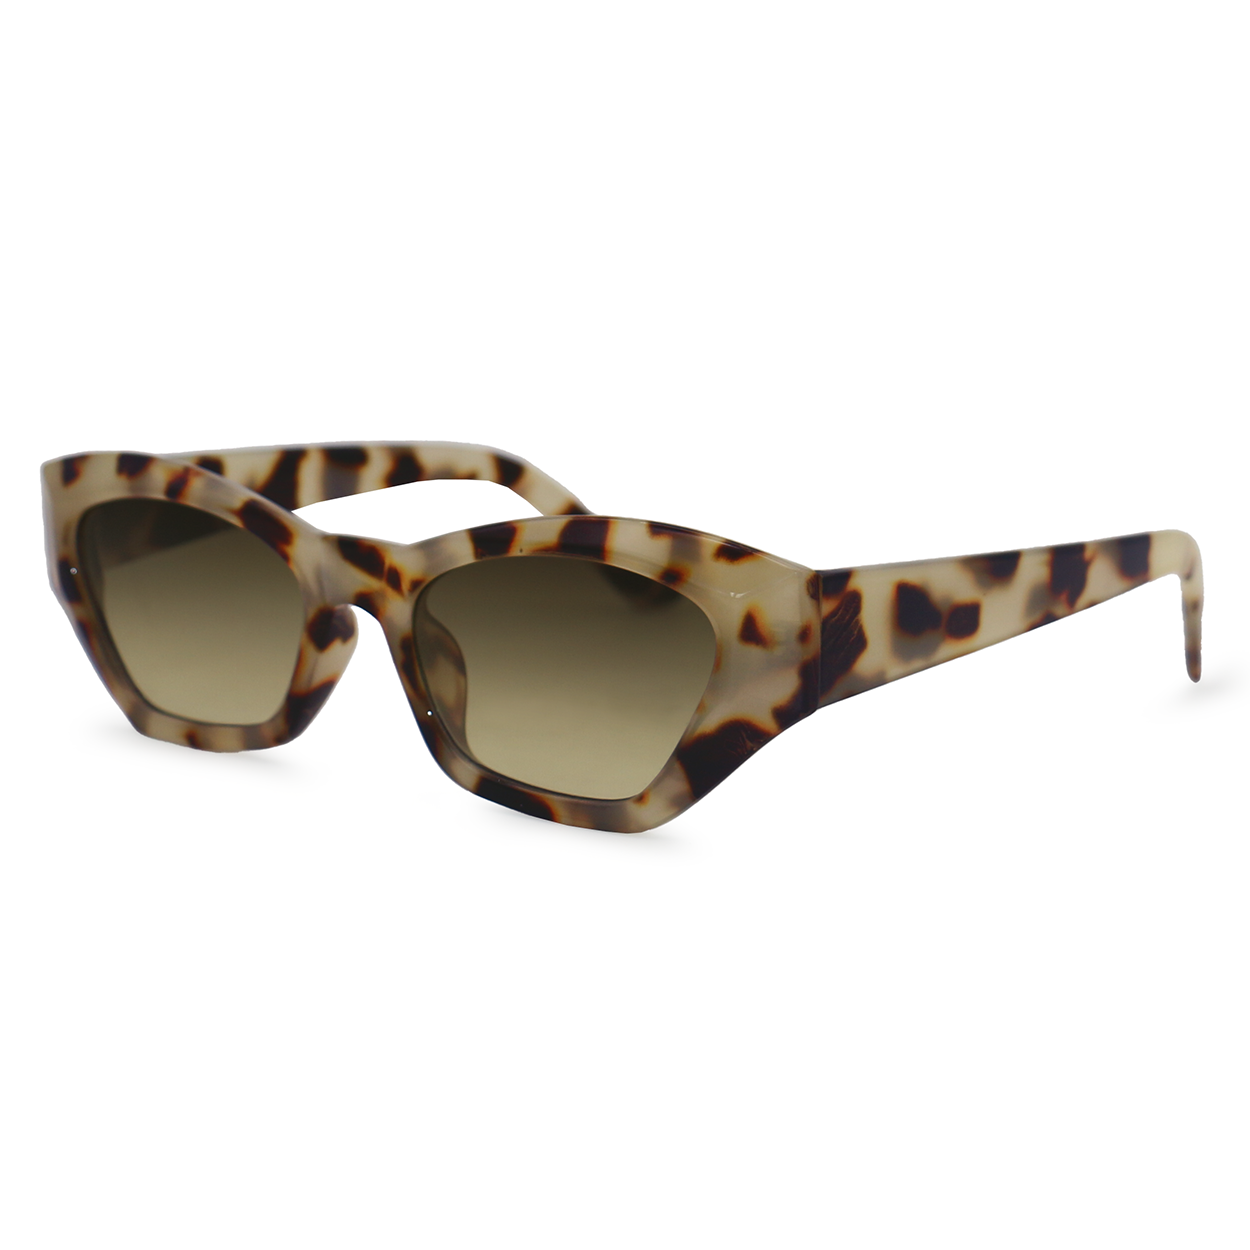 TopFoxx - Bright as my Future - Tortoise Rectangle Cat Eye Sunglasses for Women - Side Profile